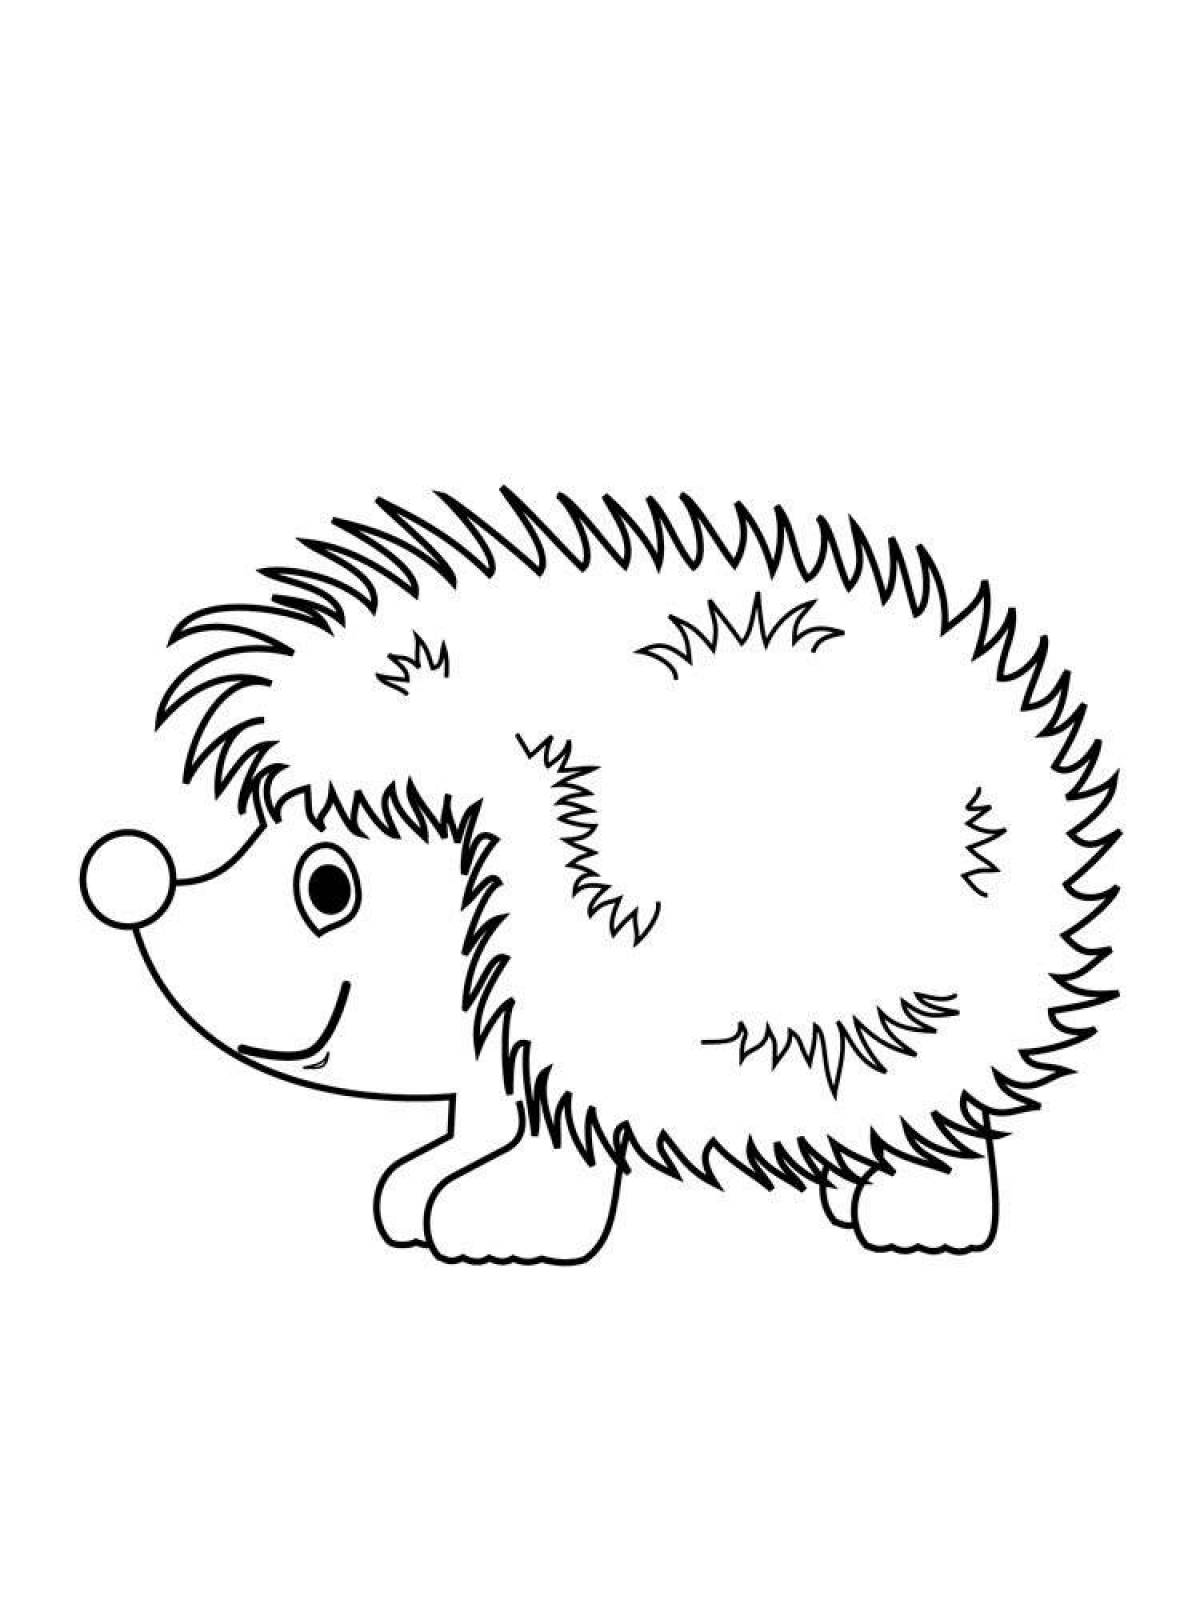 Wonderful hedgehog coloring book for kids